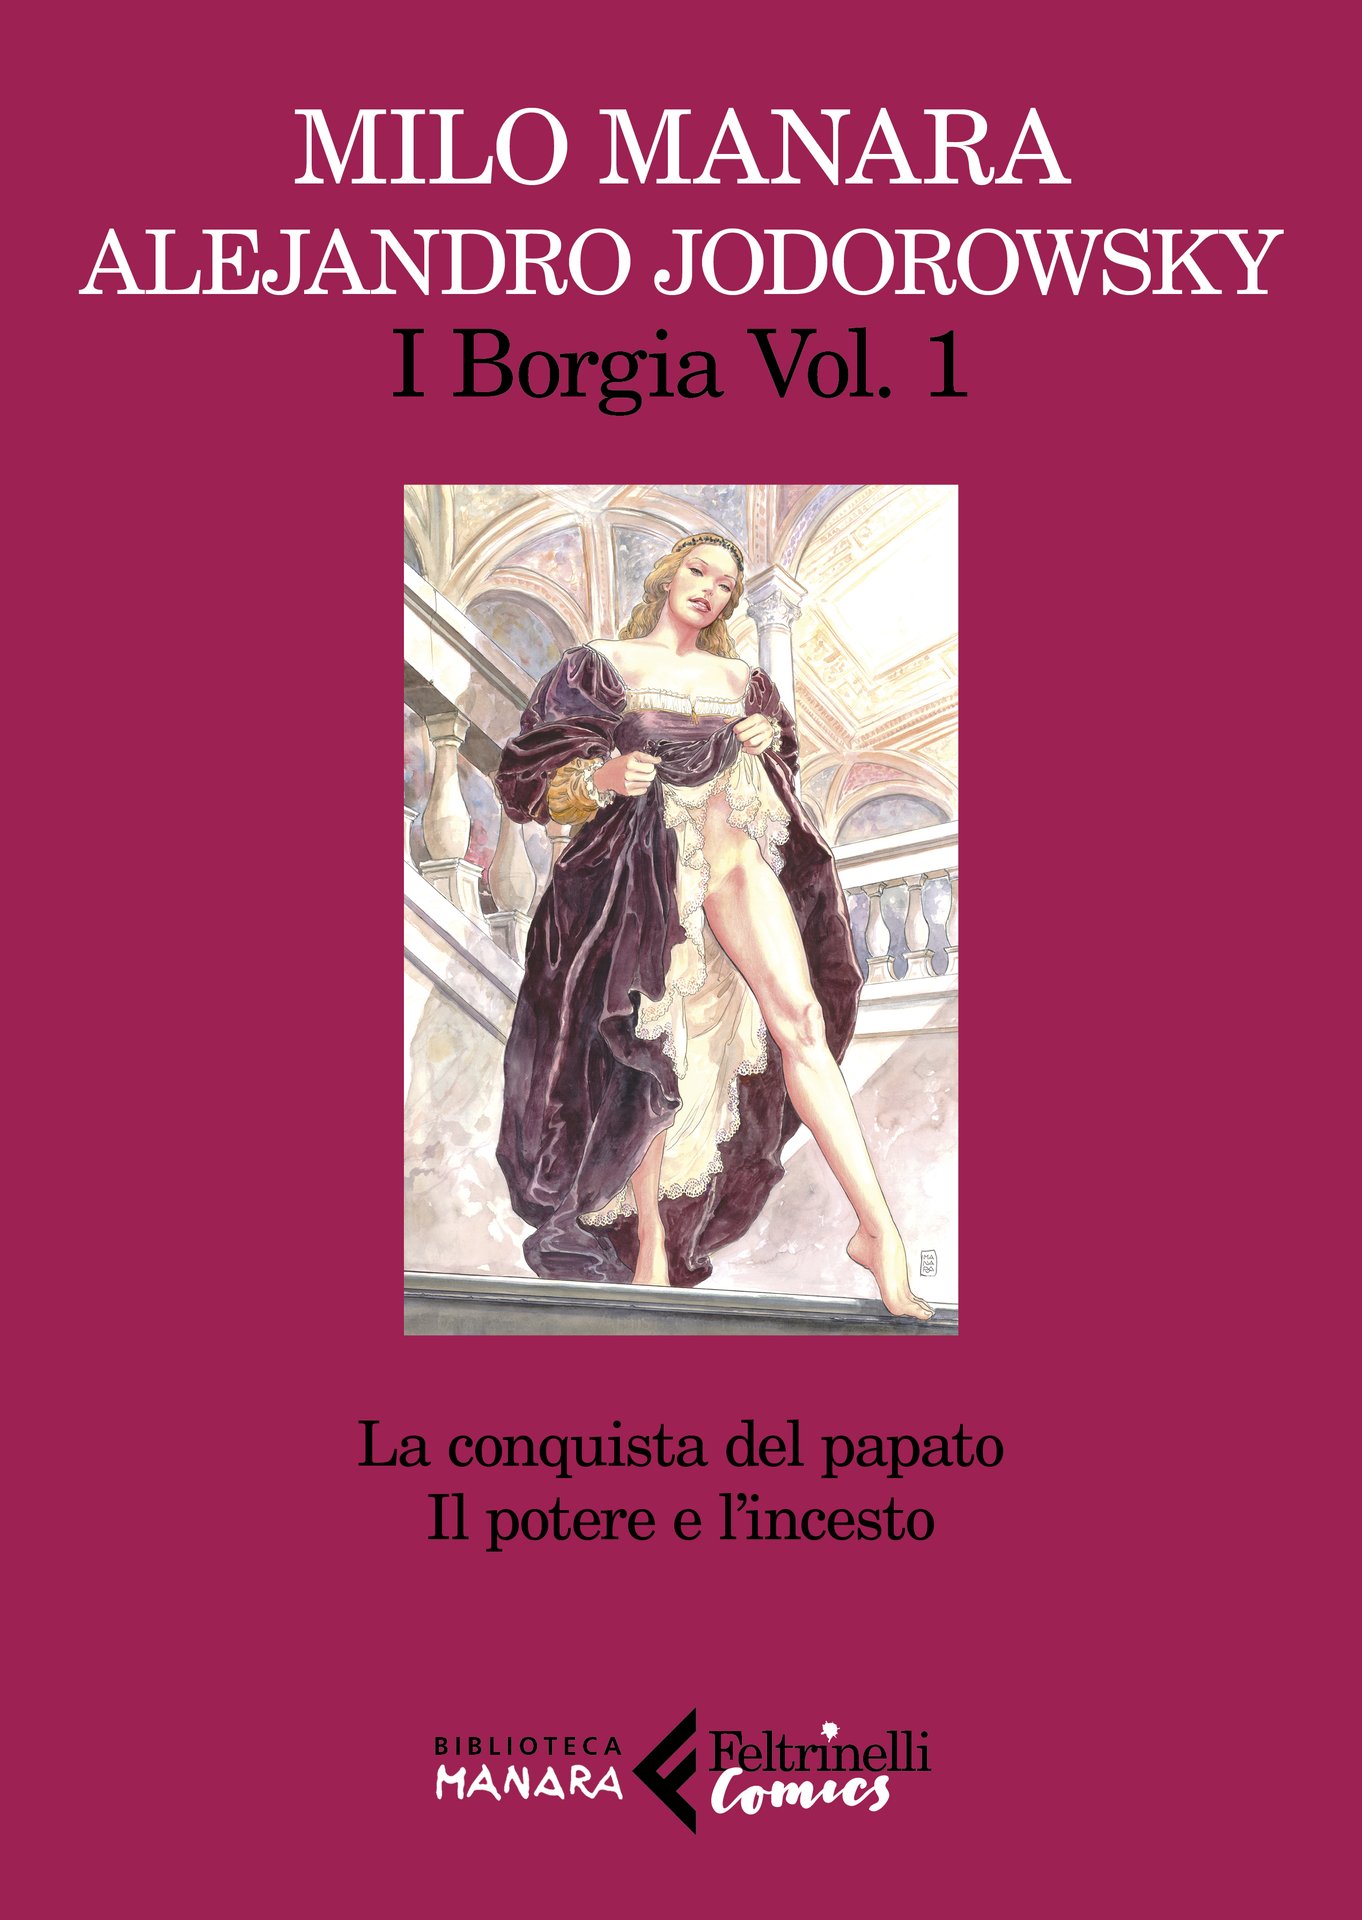 I Borgia, vol. 1